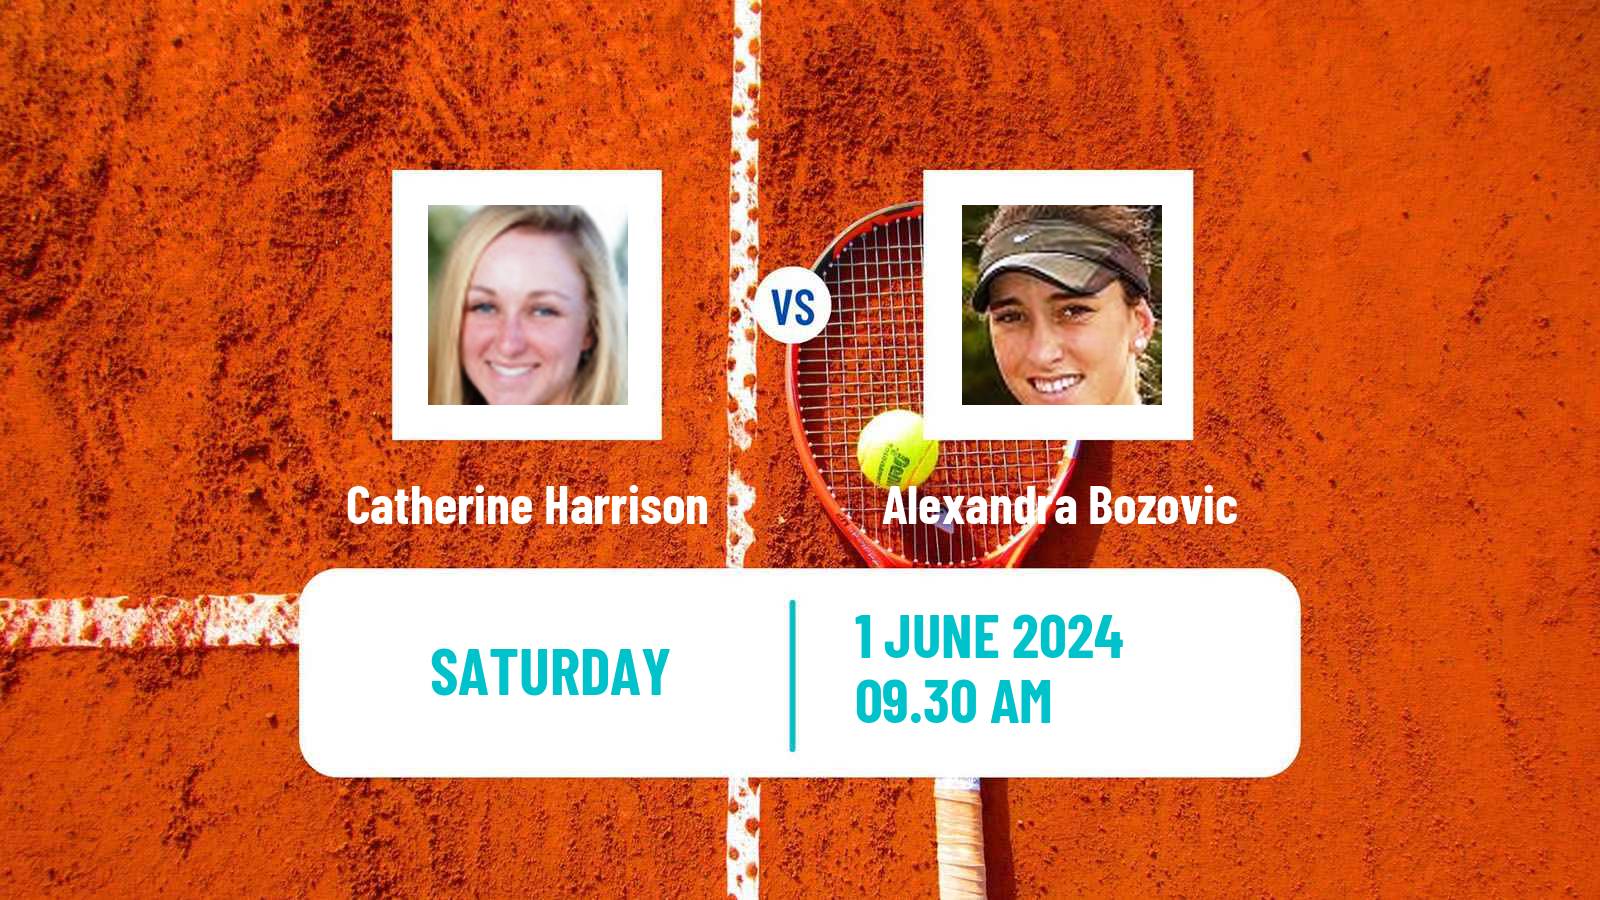 Tennis ITF W35 Santo Domingo 4 Women Catherine Harrison - Alexandra Bozovic